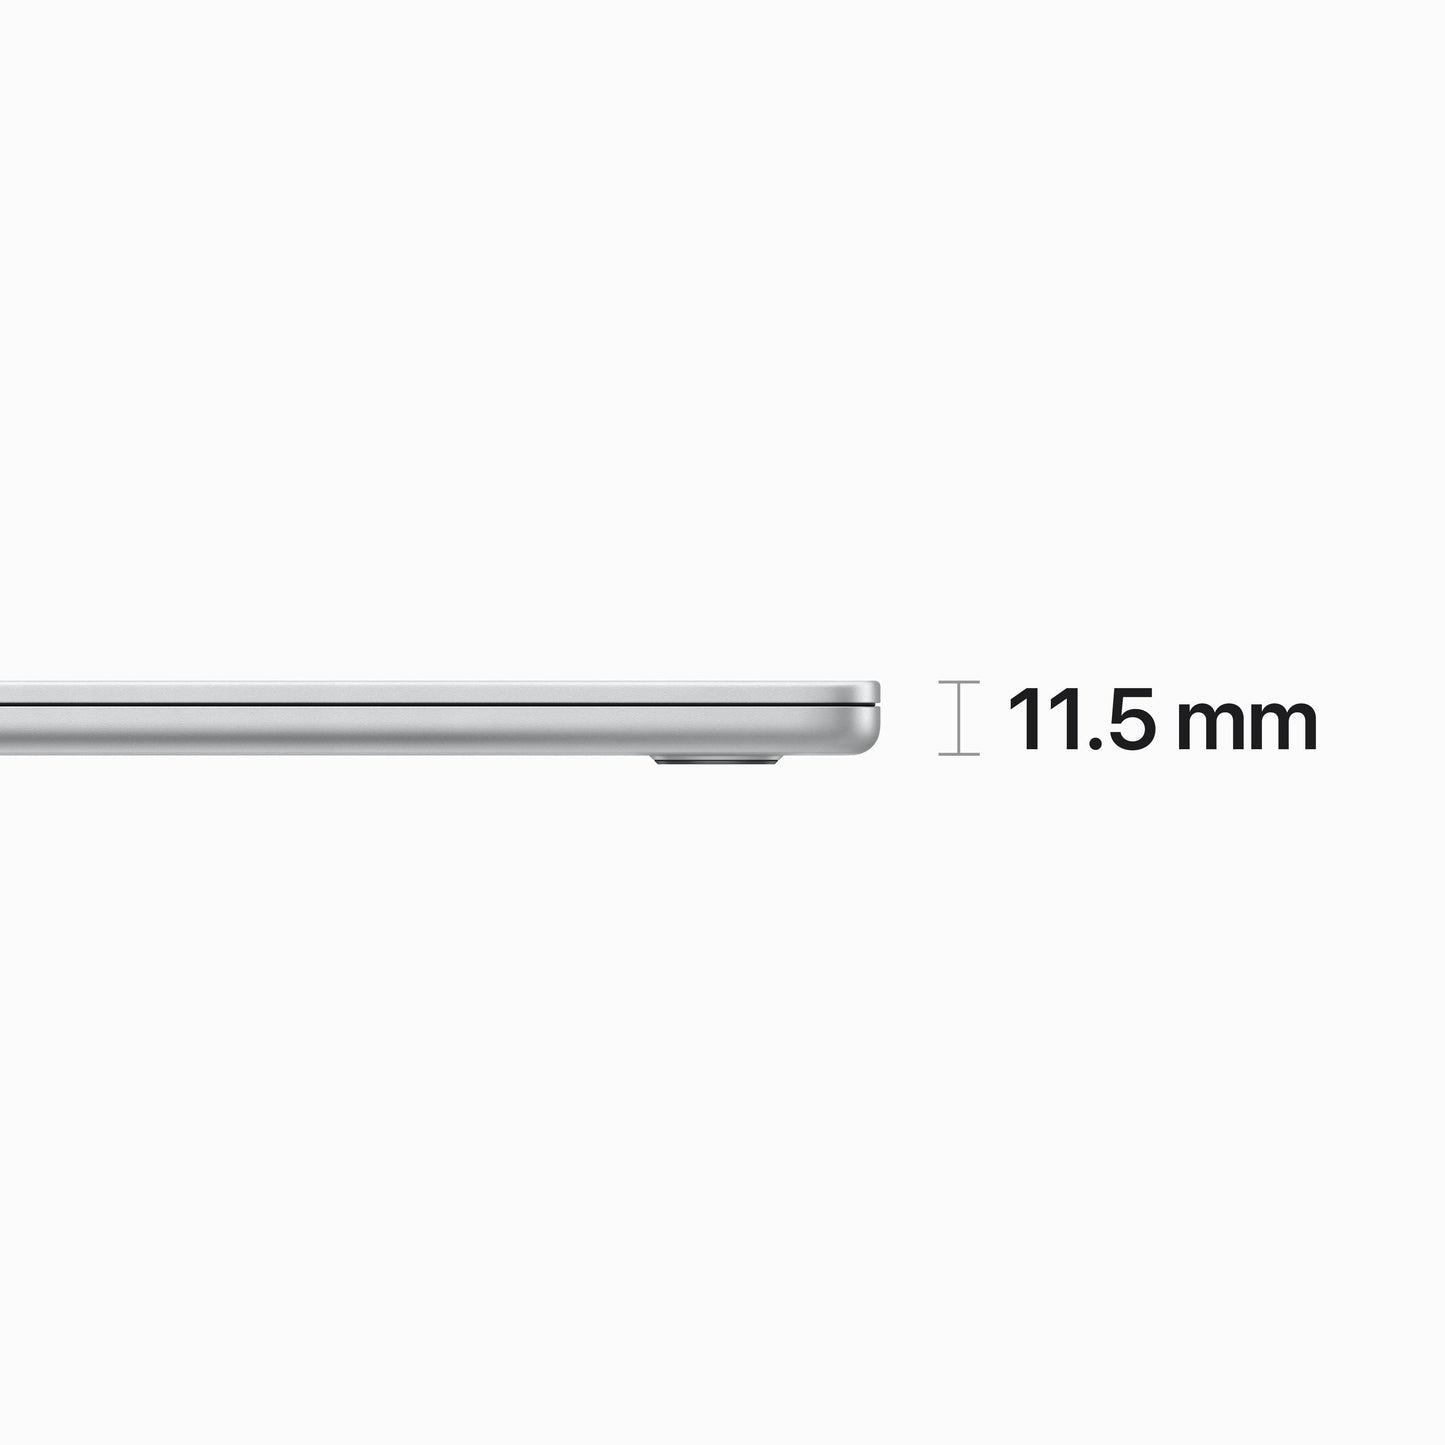 15-inch MacBook Air: Apple M2 chip with 8‑core CPU and 10‑core GPU, 256GB SSD - Silver